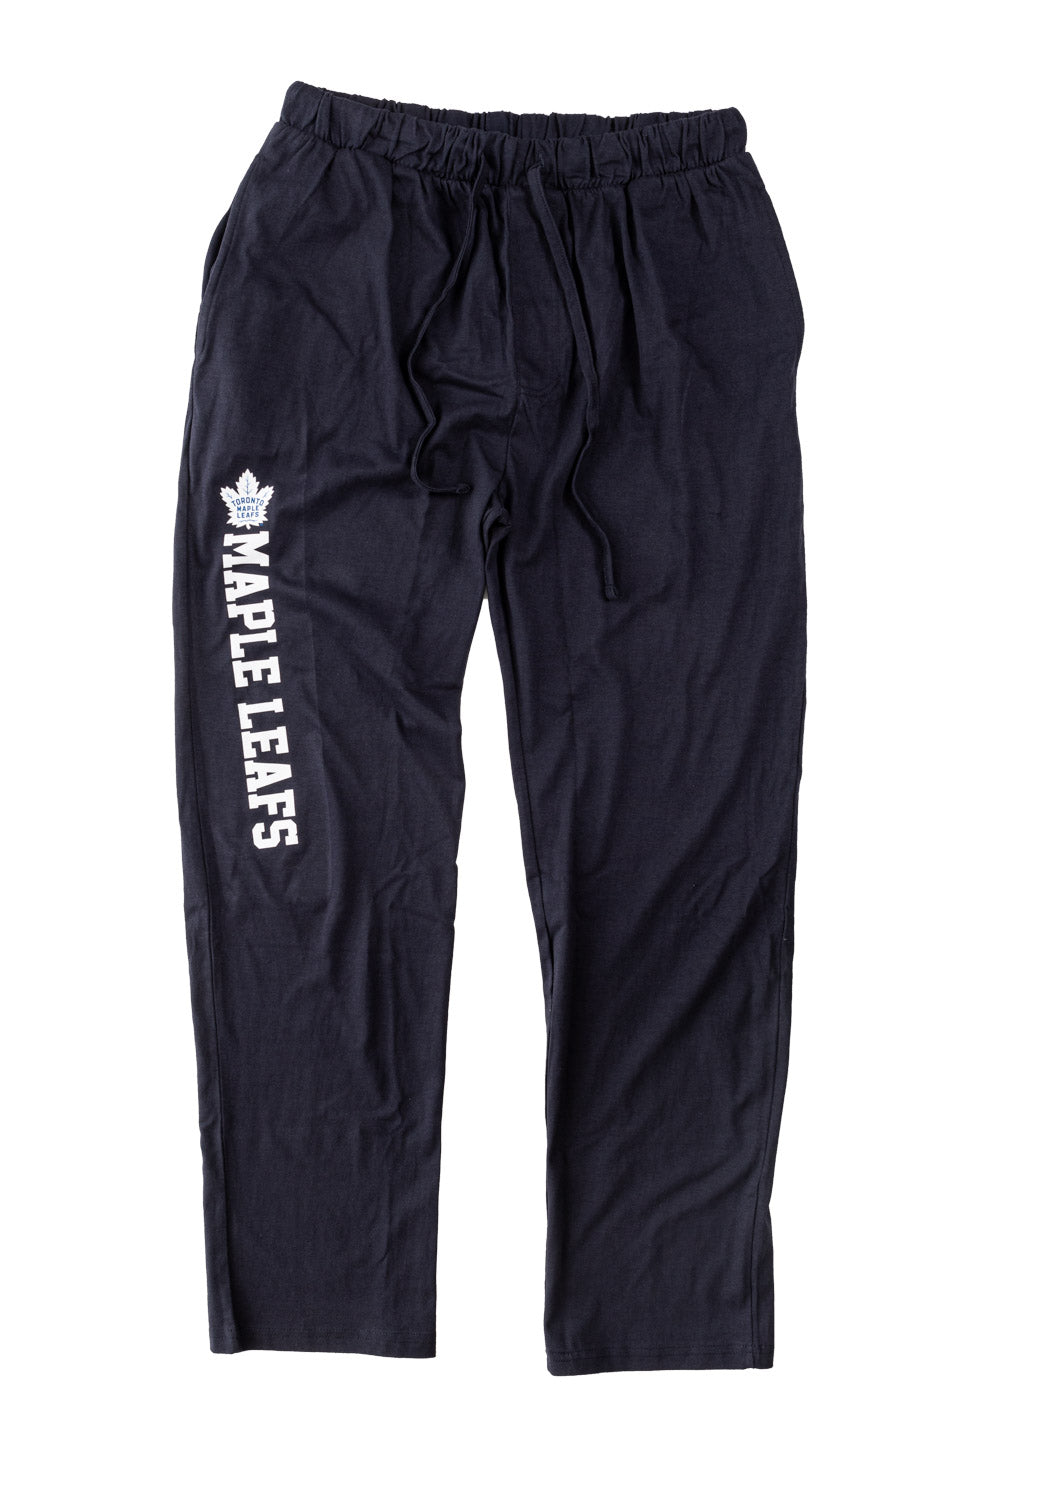 Toronto Maple Leafs Men's Cotton Jersey Pants